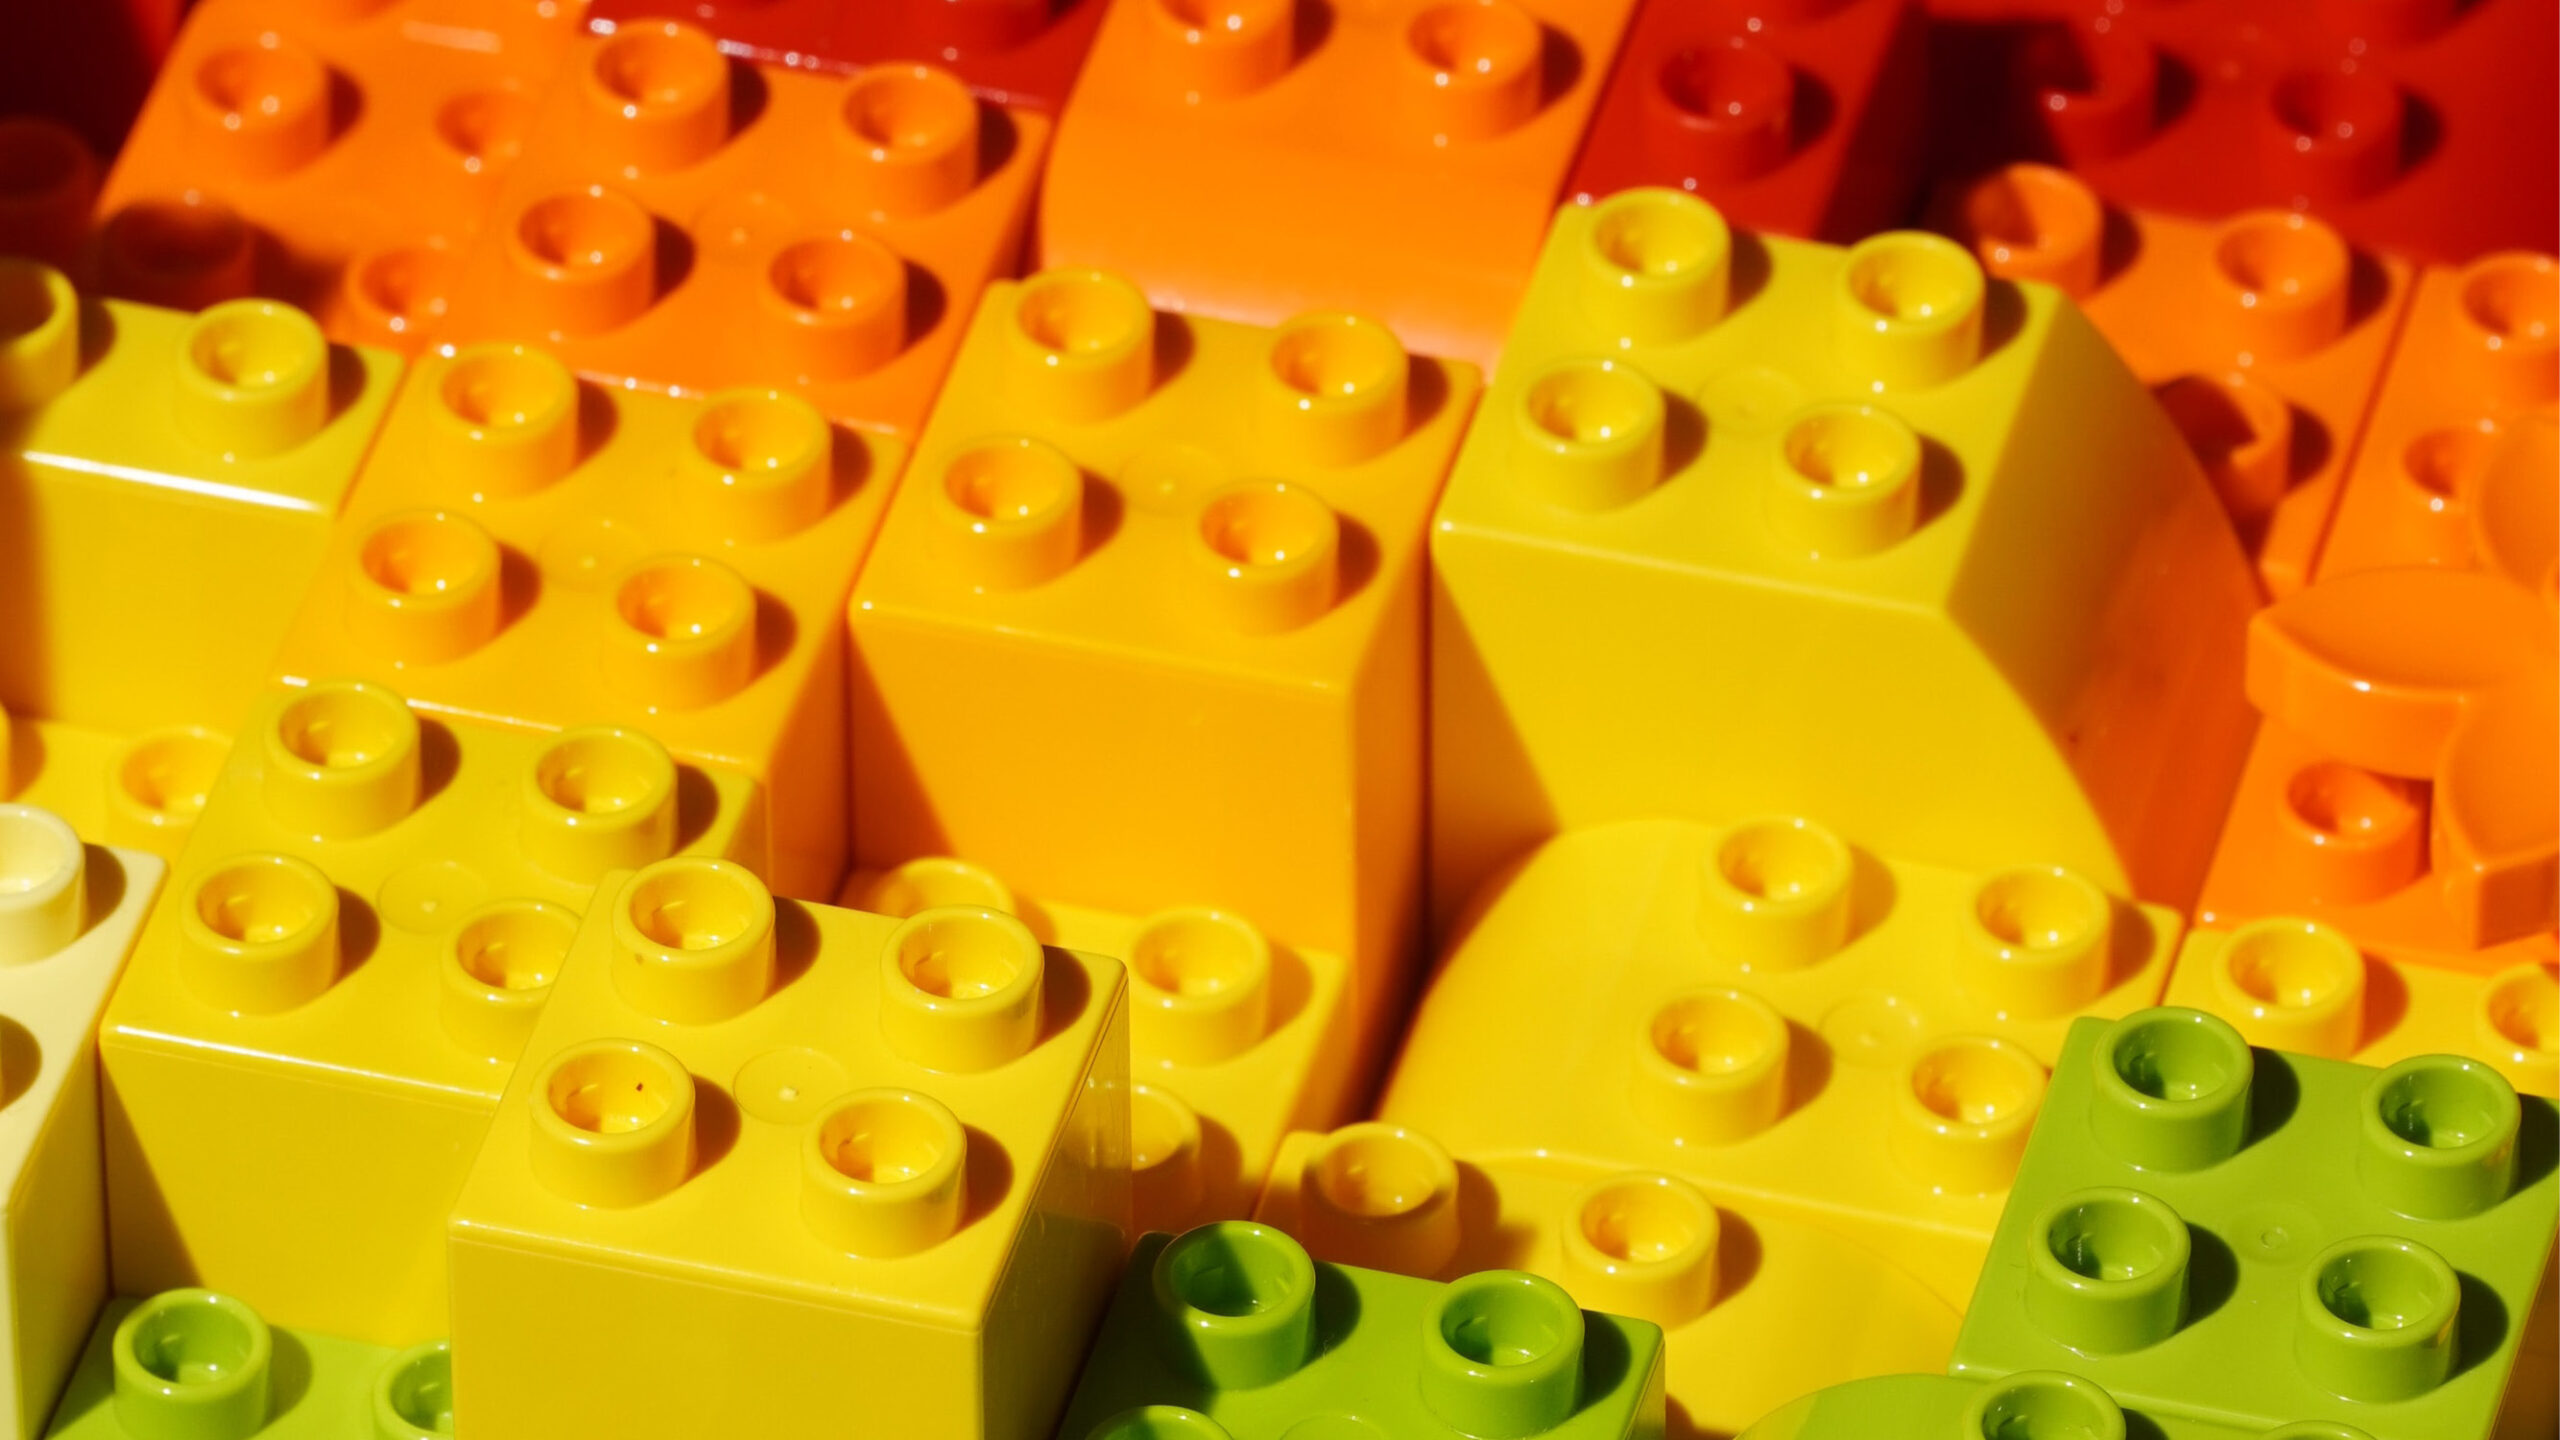 Colorful legos